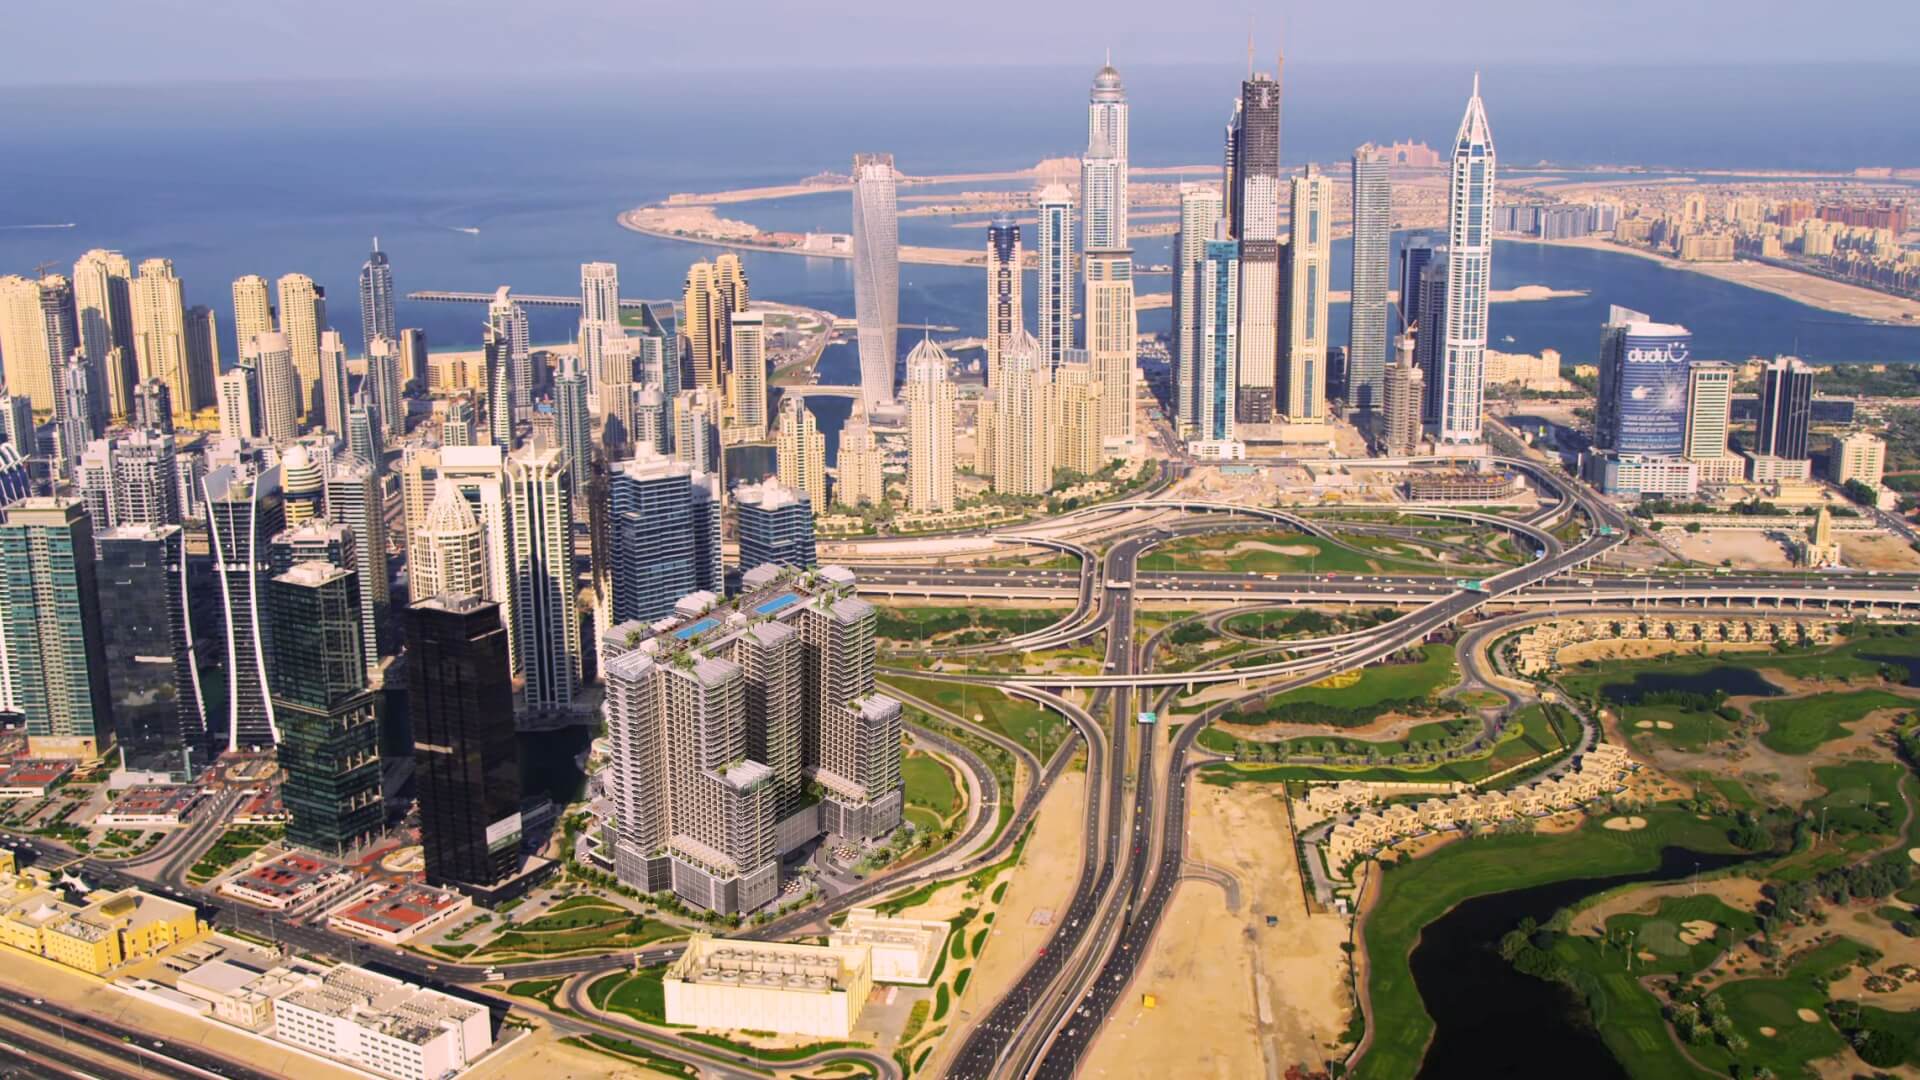 GOLF VIEWS SEVEN CITY by Seven Tides International in Jumeirah Lake Towers, Dubai - 7